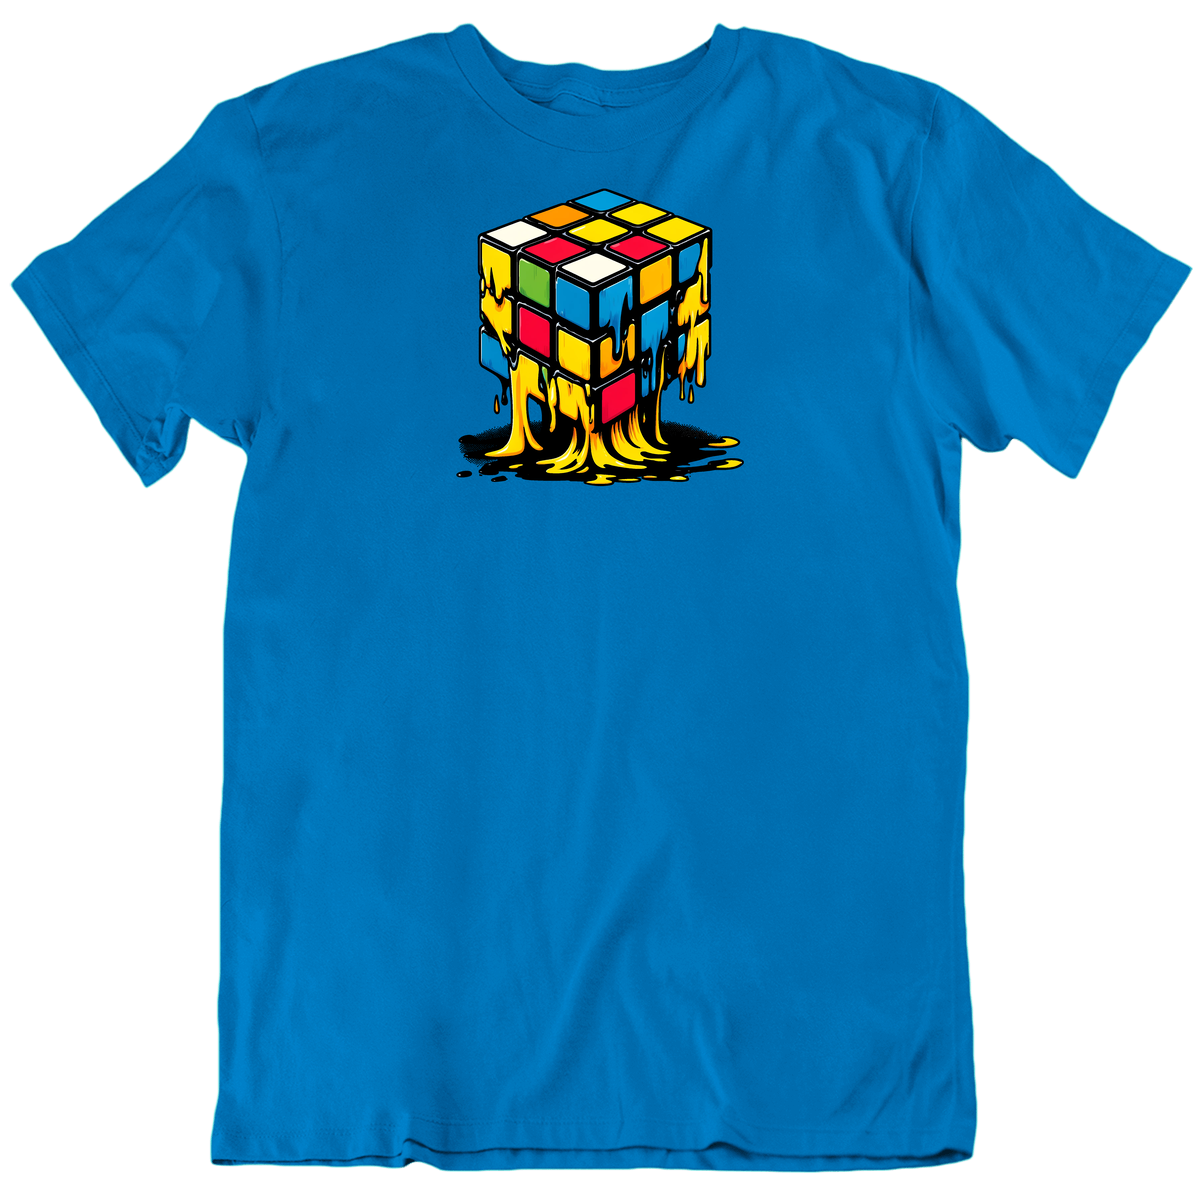 Melting Rubik's Cube Retro Funny Parody T Shirt